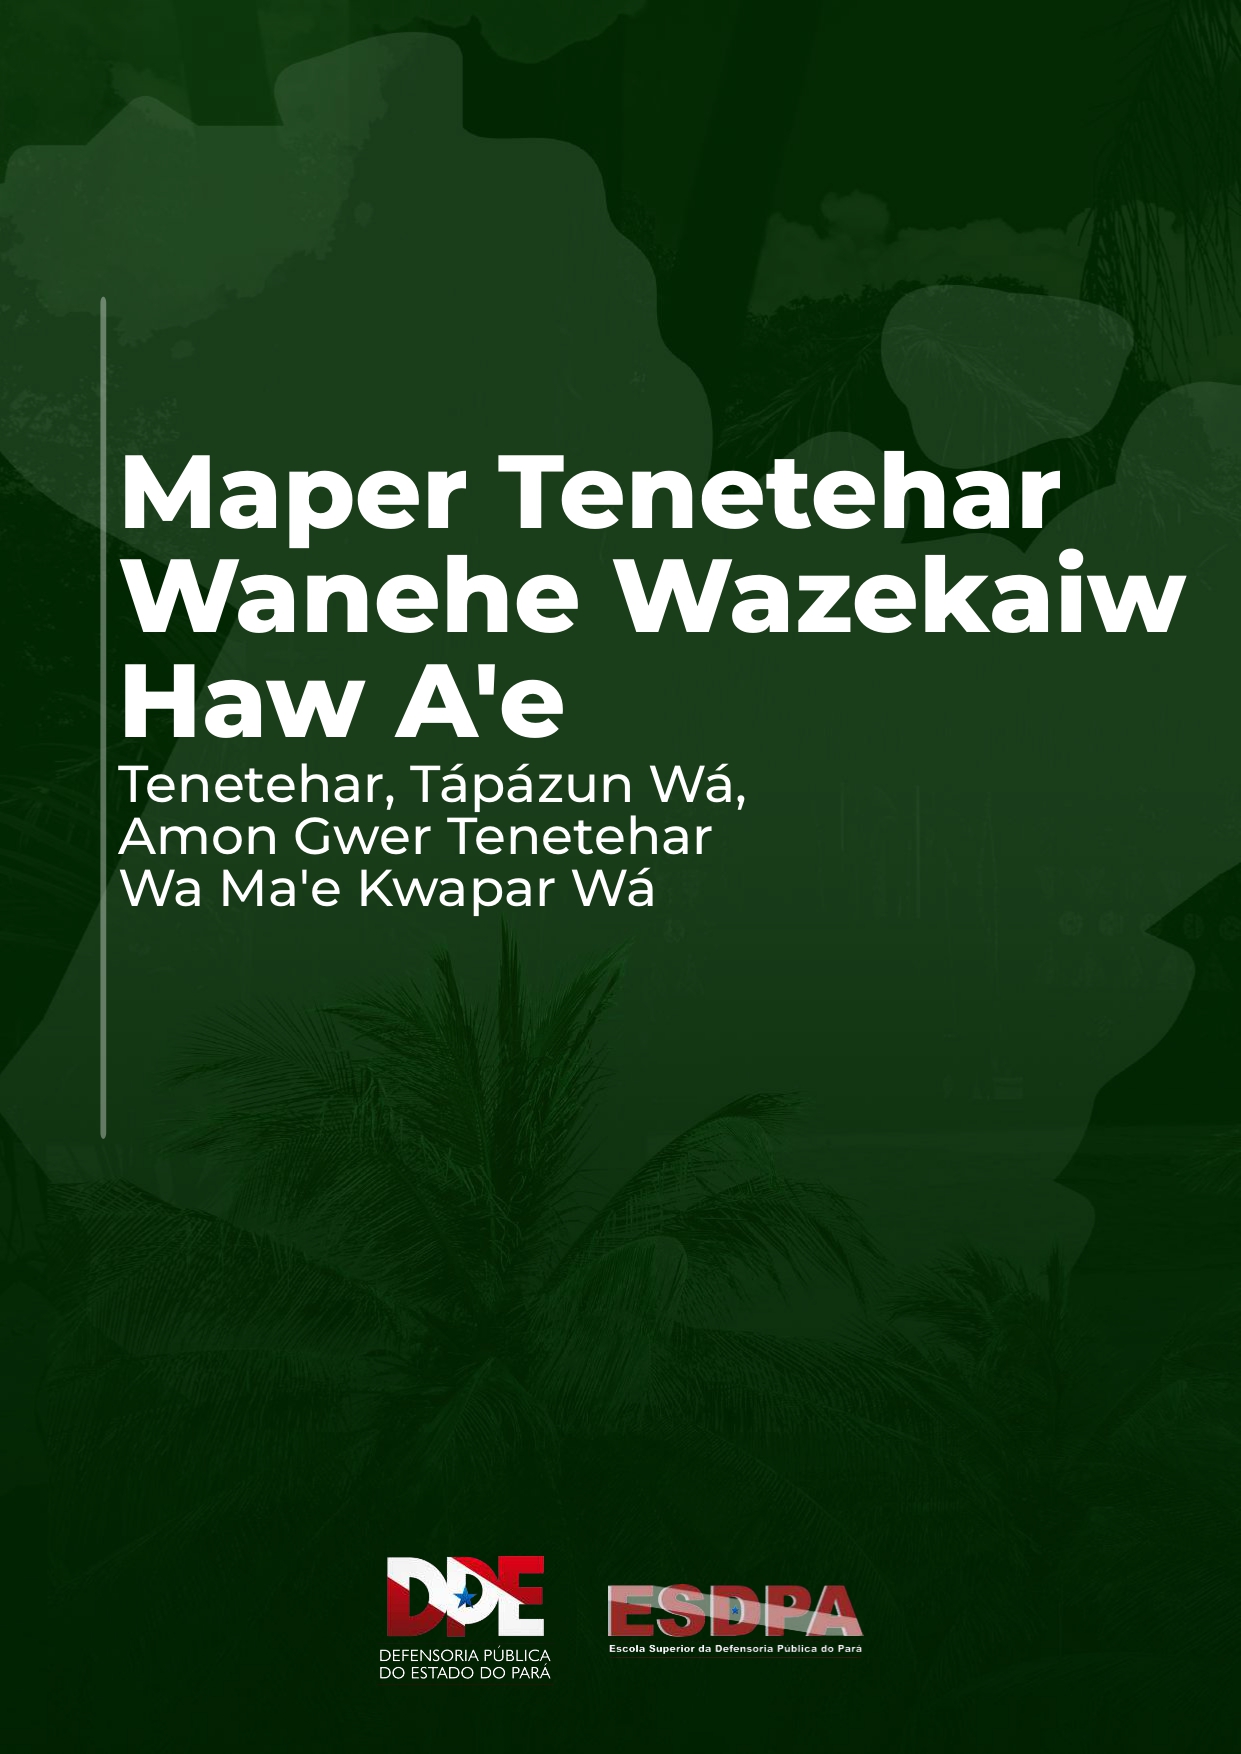 Maper Tenetehar Wanehe Wazekaiw Haw A'e